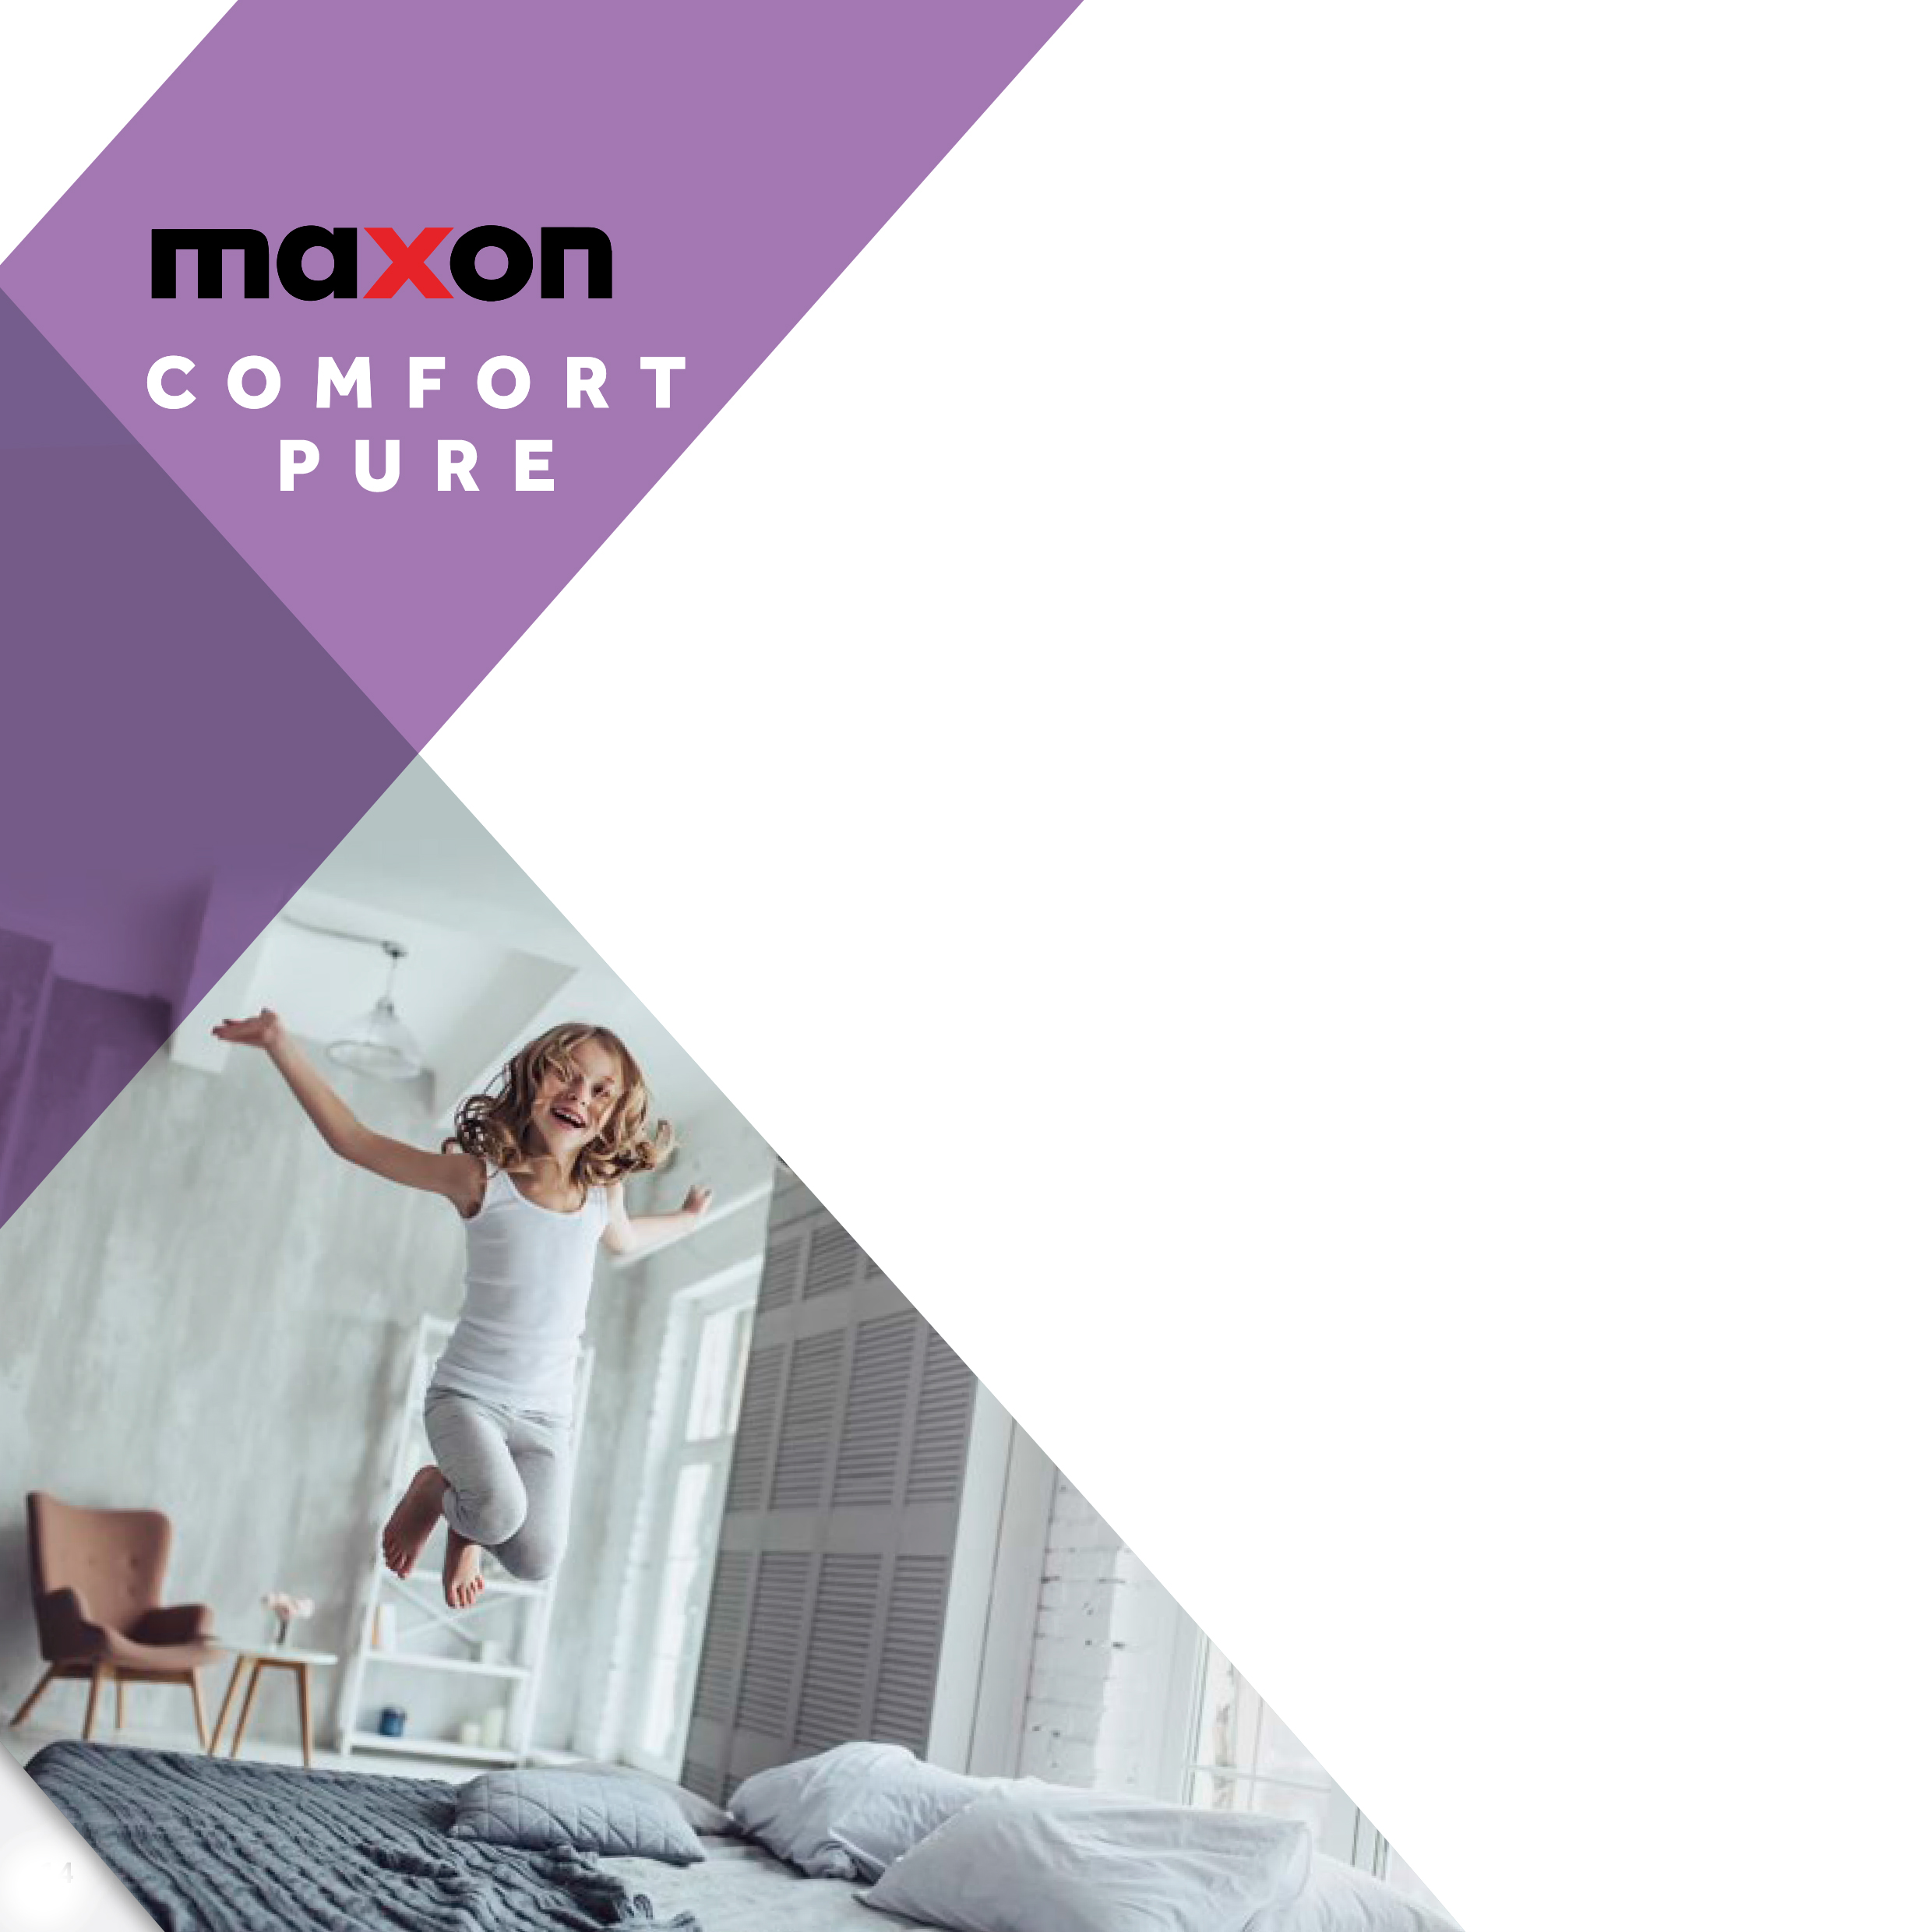 Maxon Comfort Pure